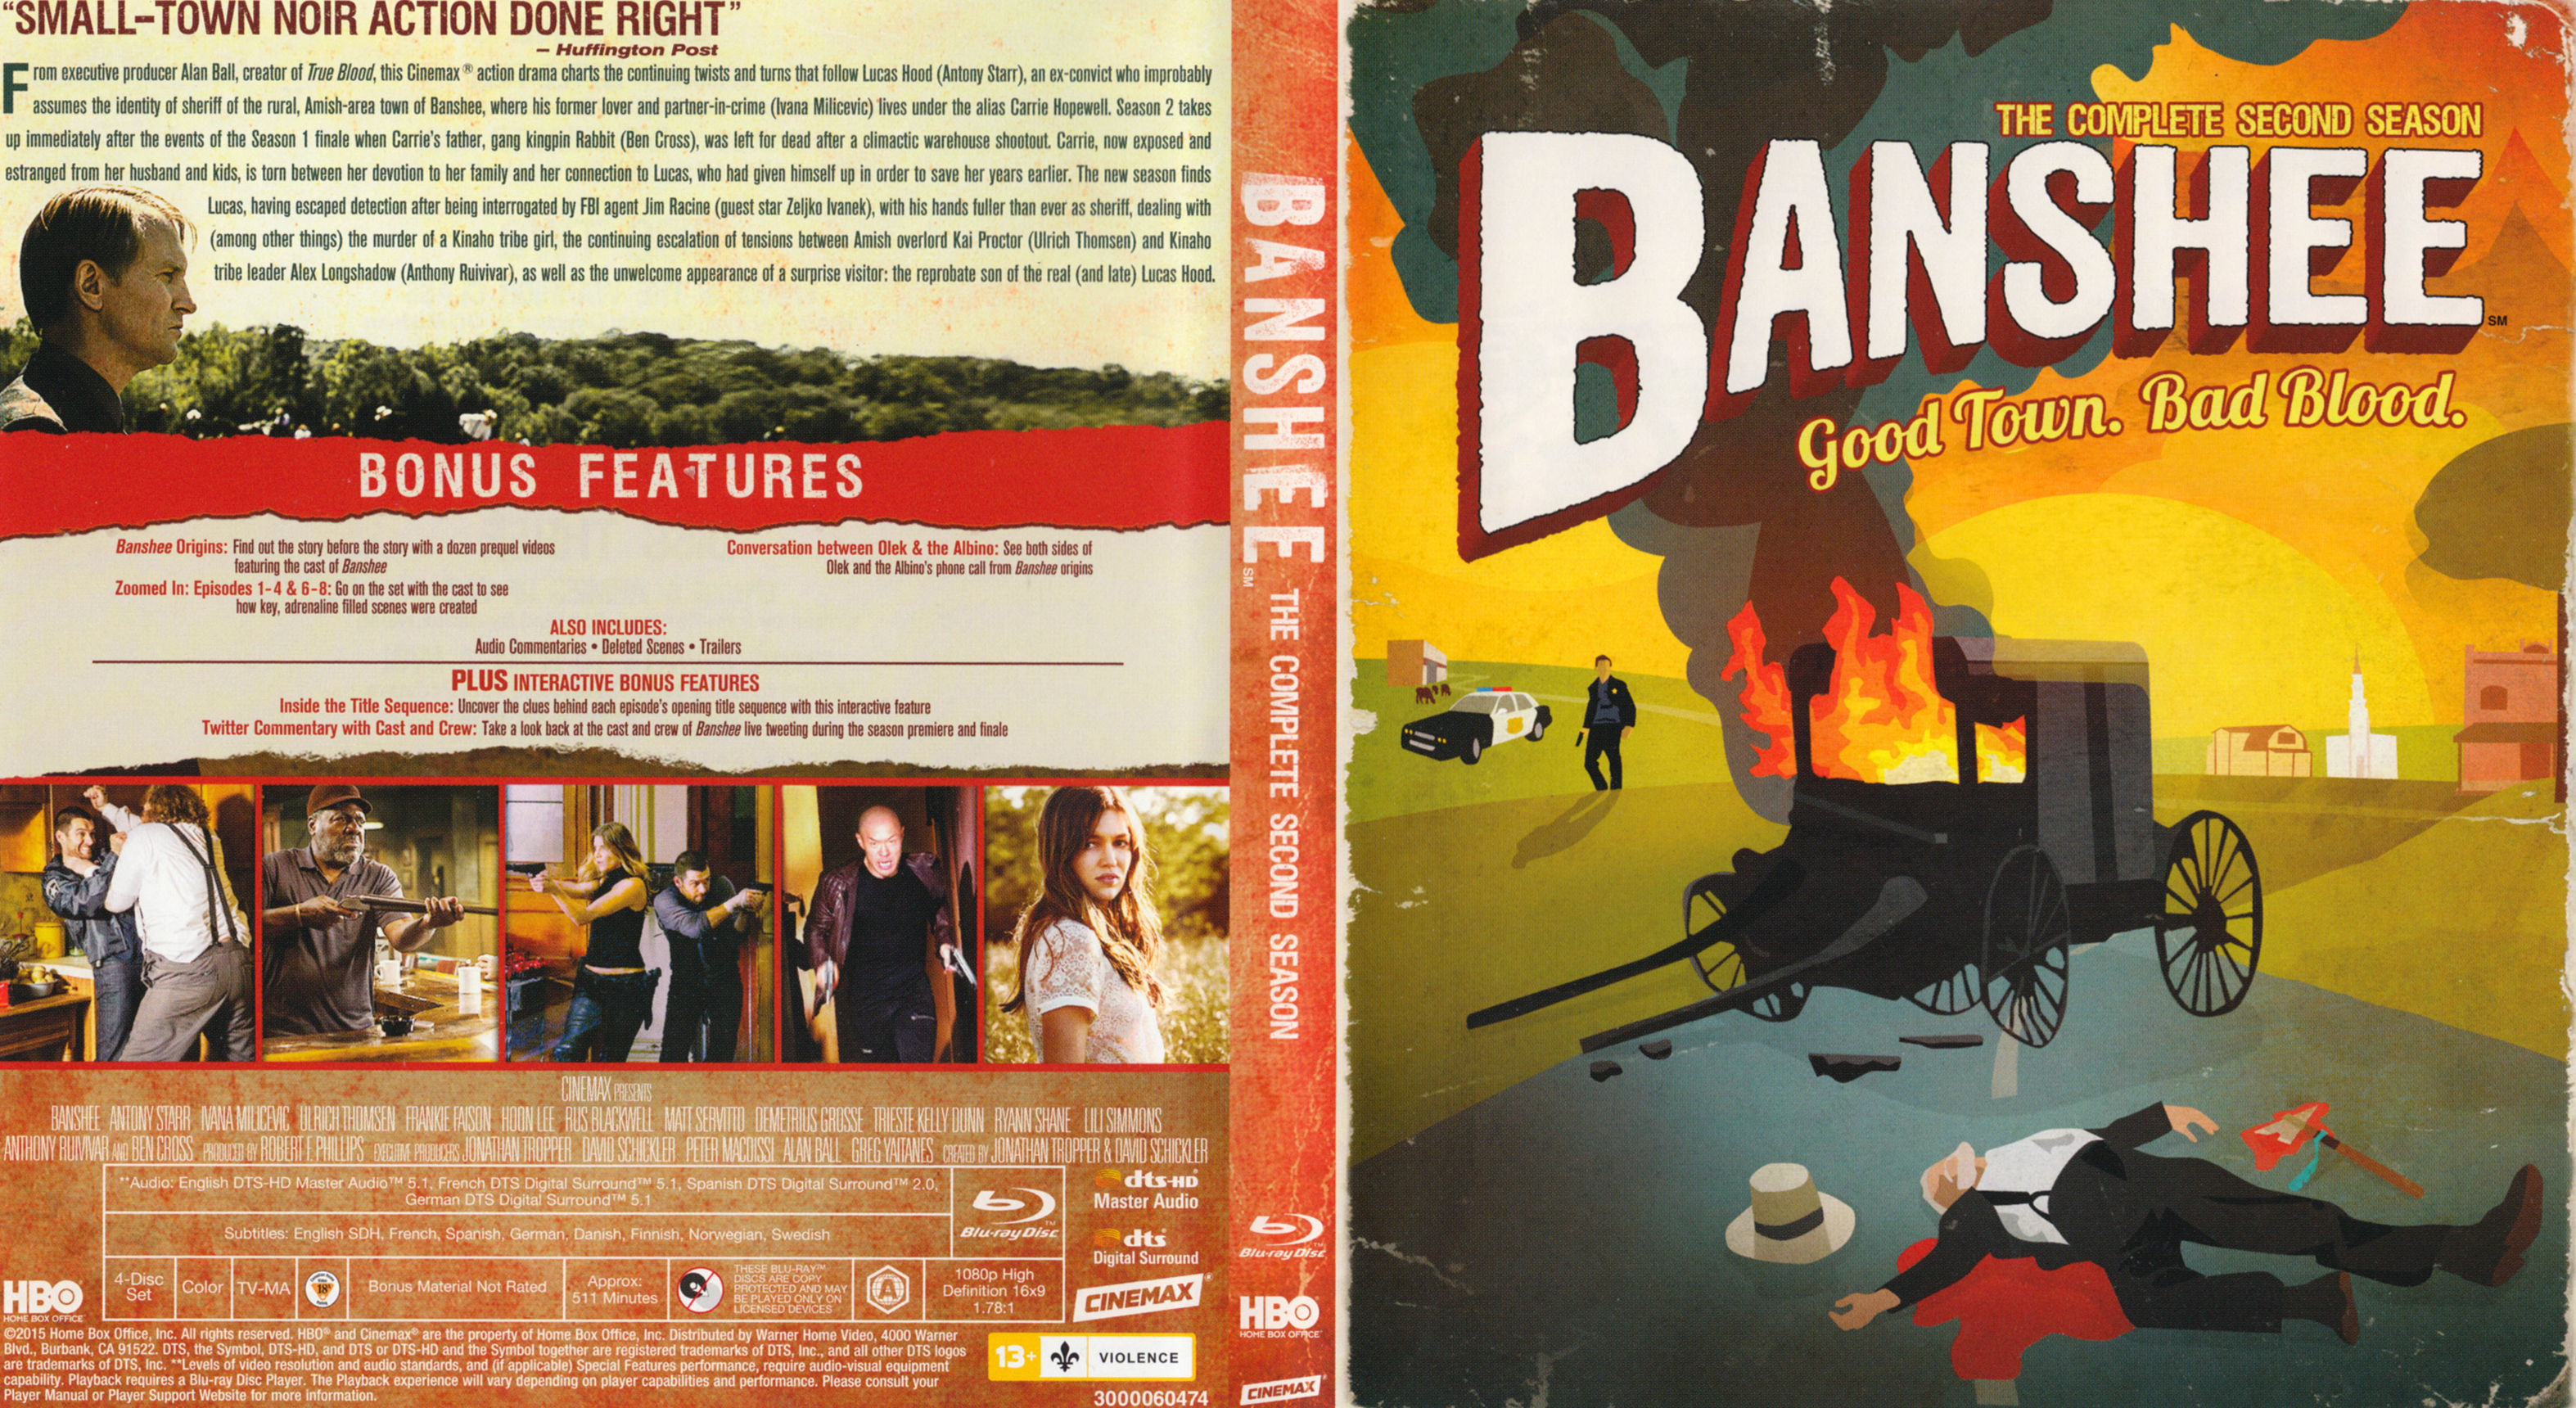 Jaquette DVD Banshee Saison 2 Zone 1 (BLU-RAY)